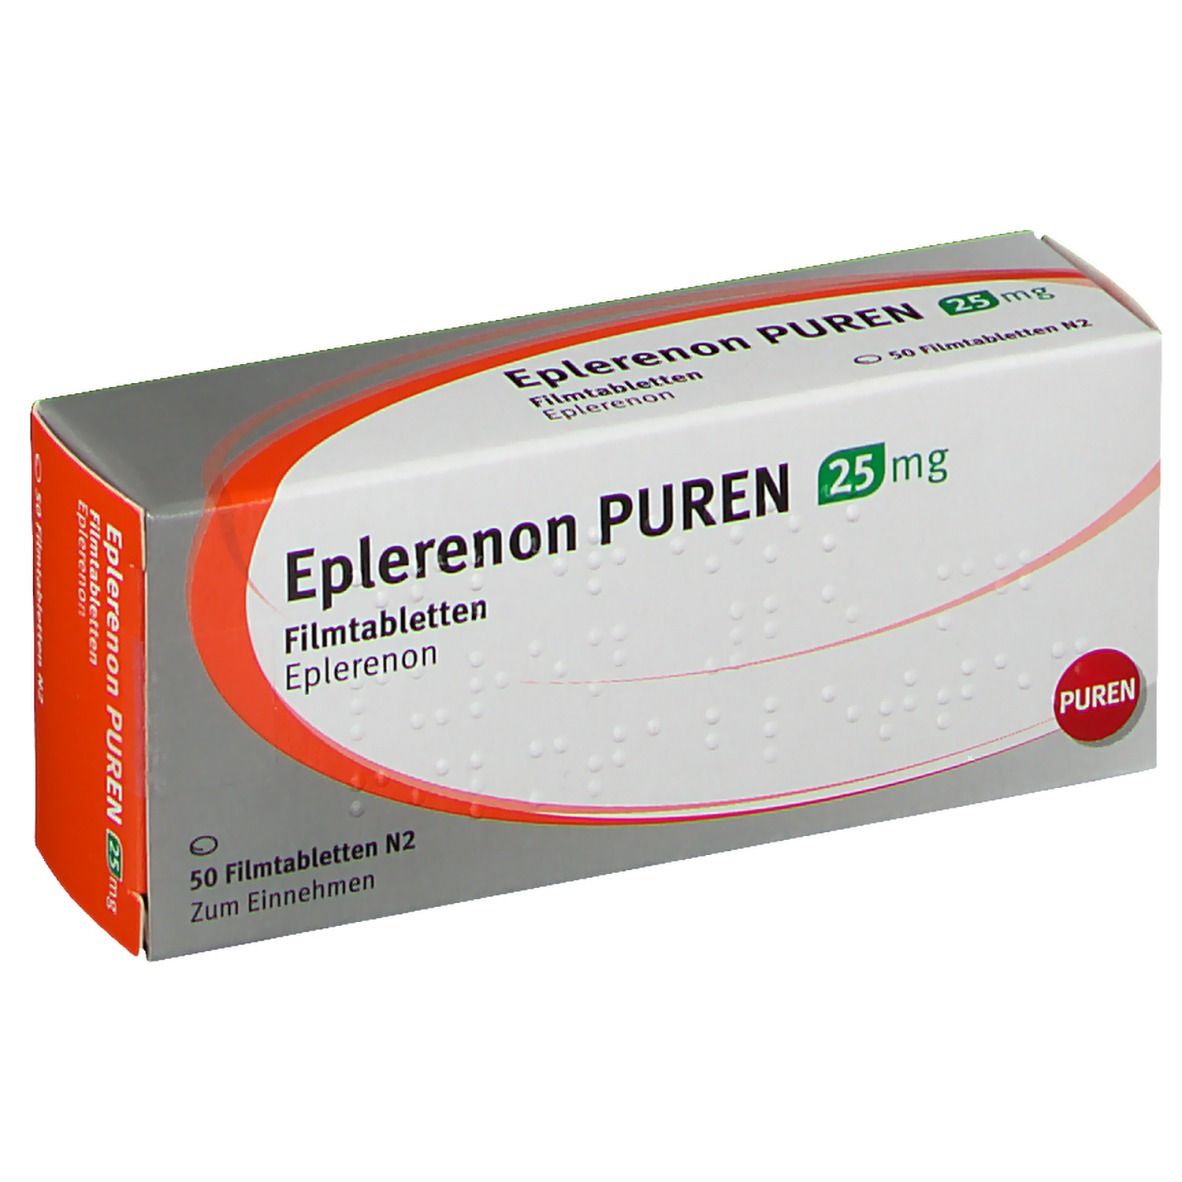 Eplerenon PUREN 25 mg